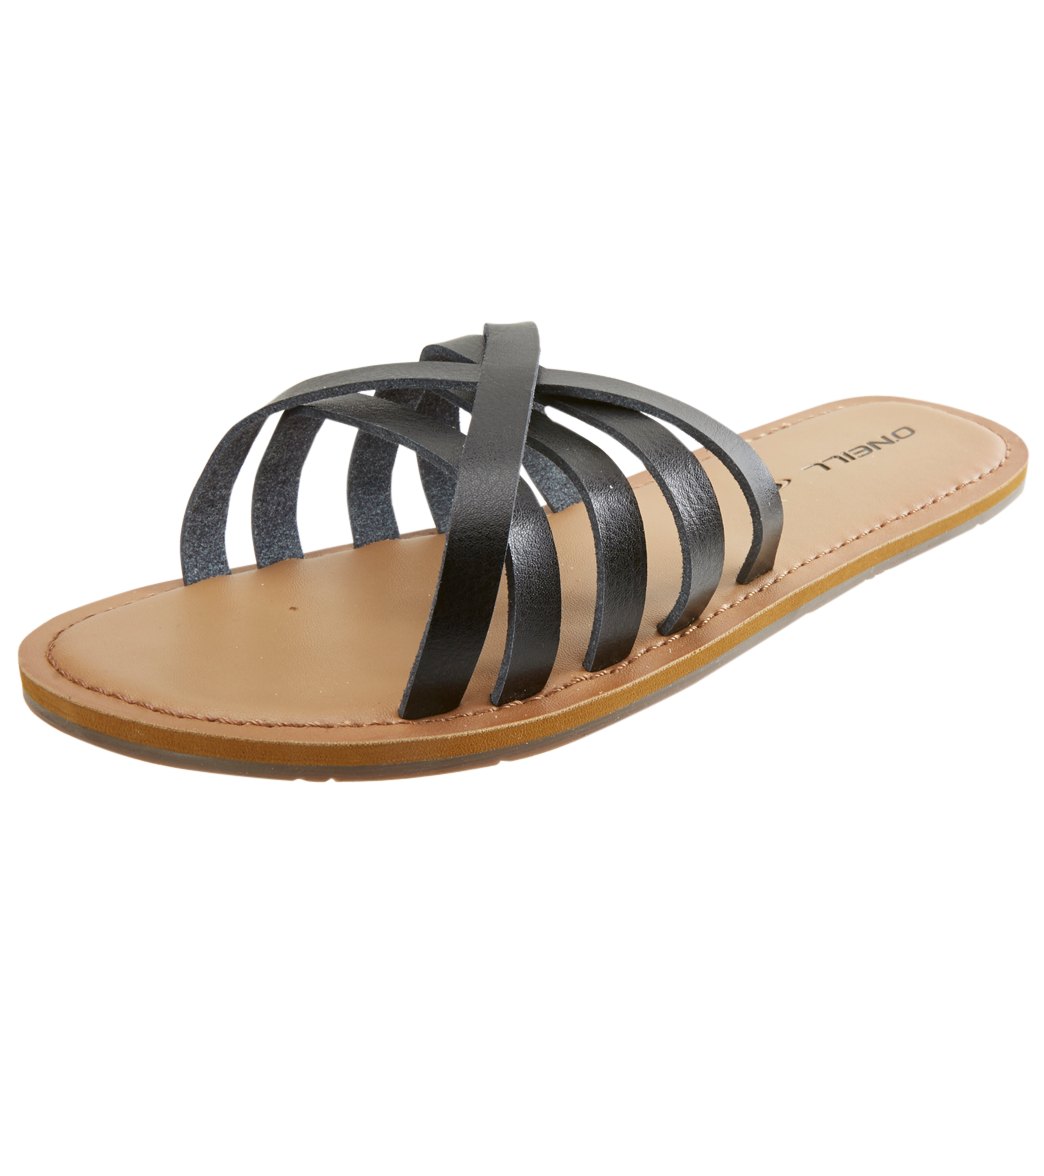 O'neill Women's Balboa Slides Sandals - Black 10 - Swimoutlet.com